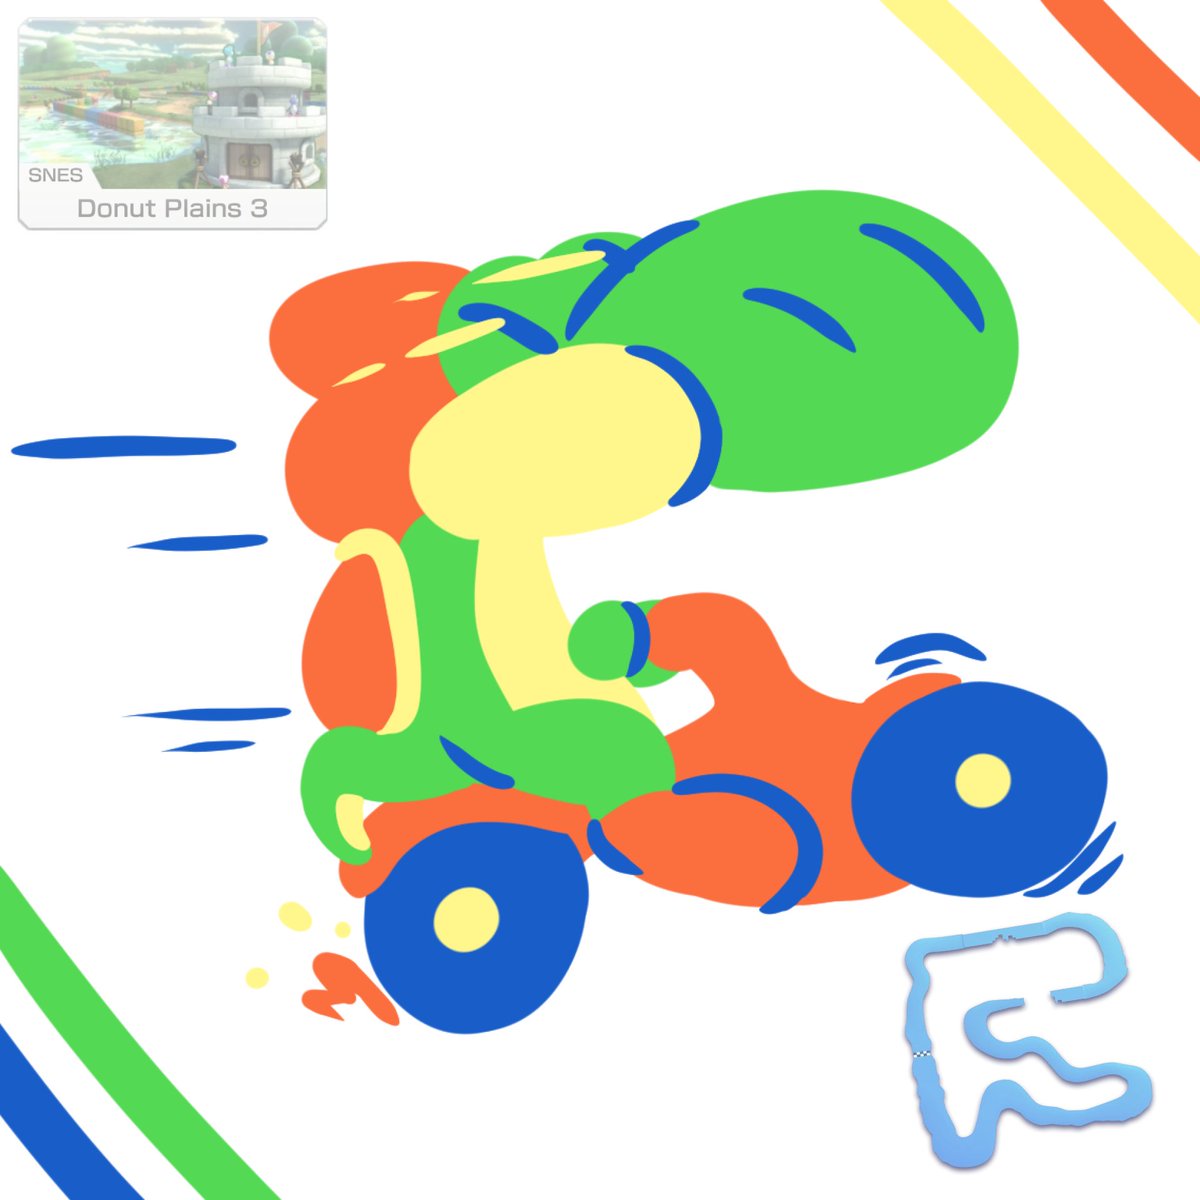 22 - Banana Cup - Donut Plains 3 A Yolli wheelying at high speeds! #Yoshi #MarioKart #digitalart #Nintendo